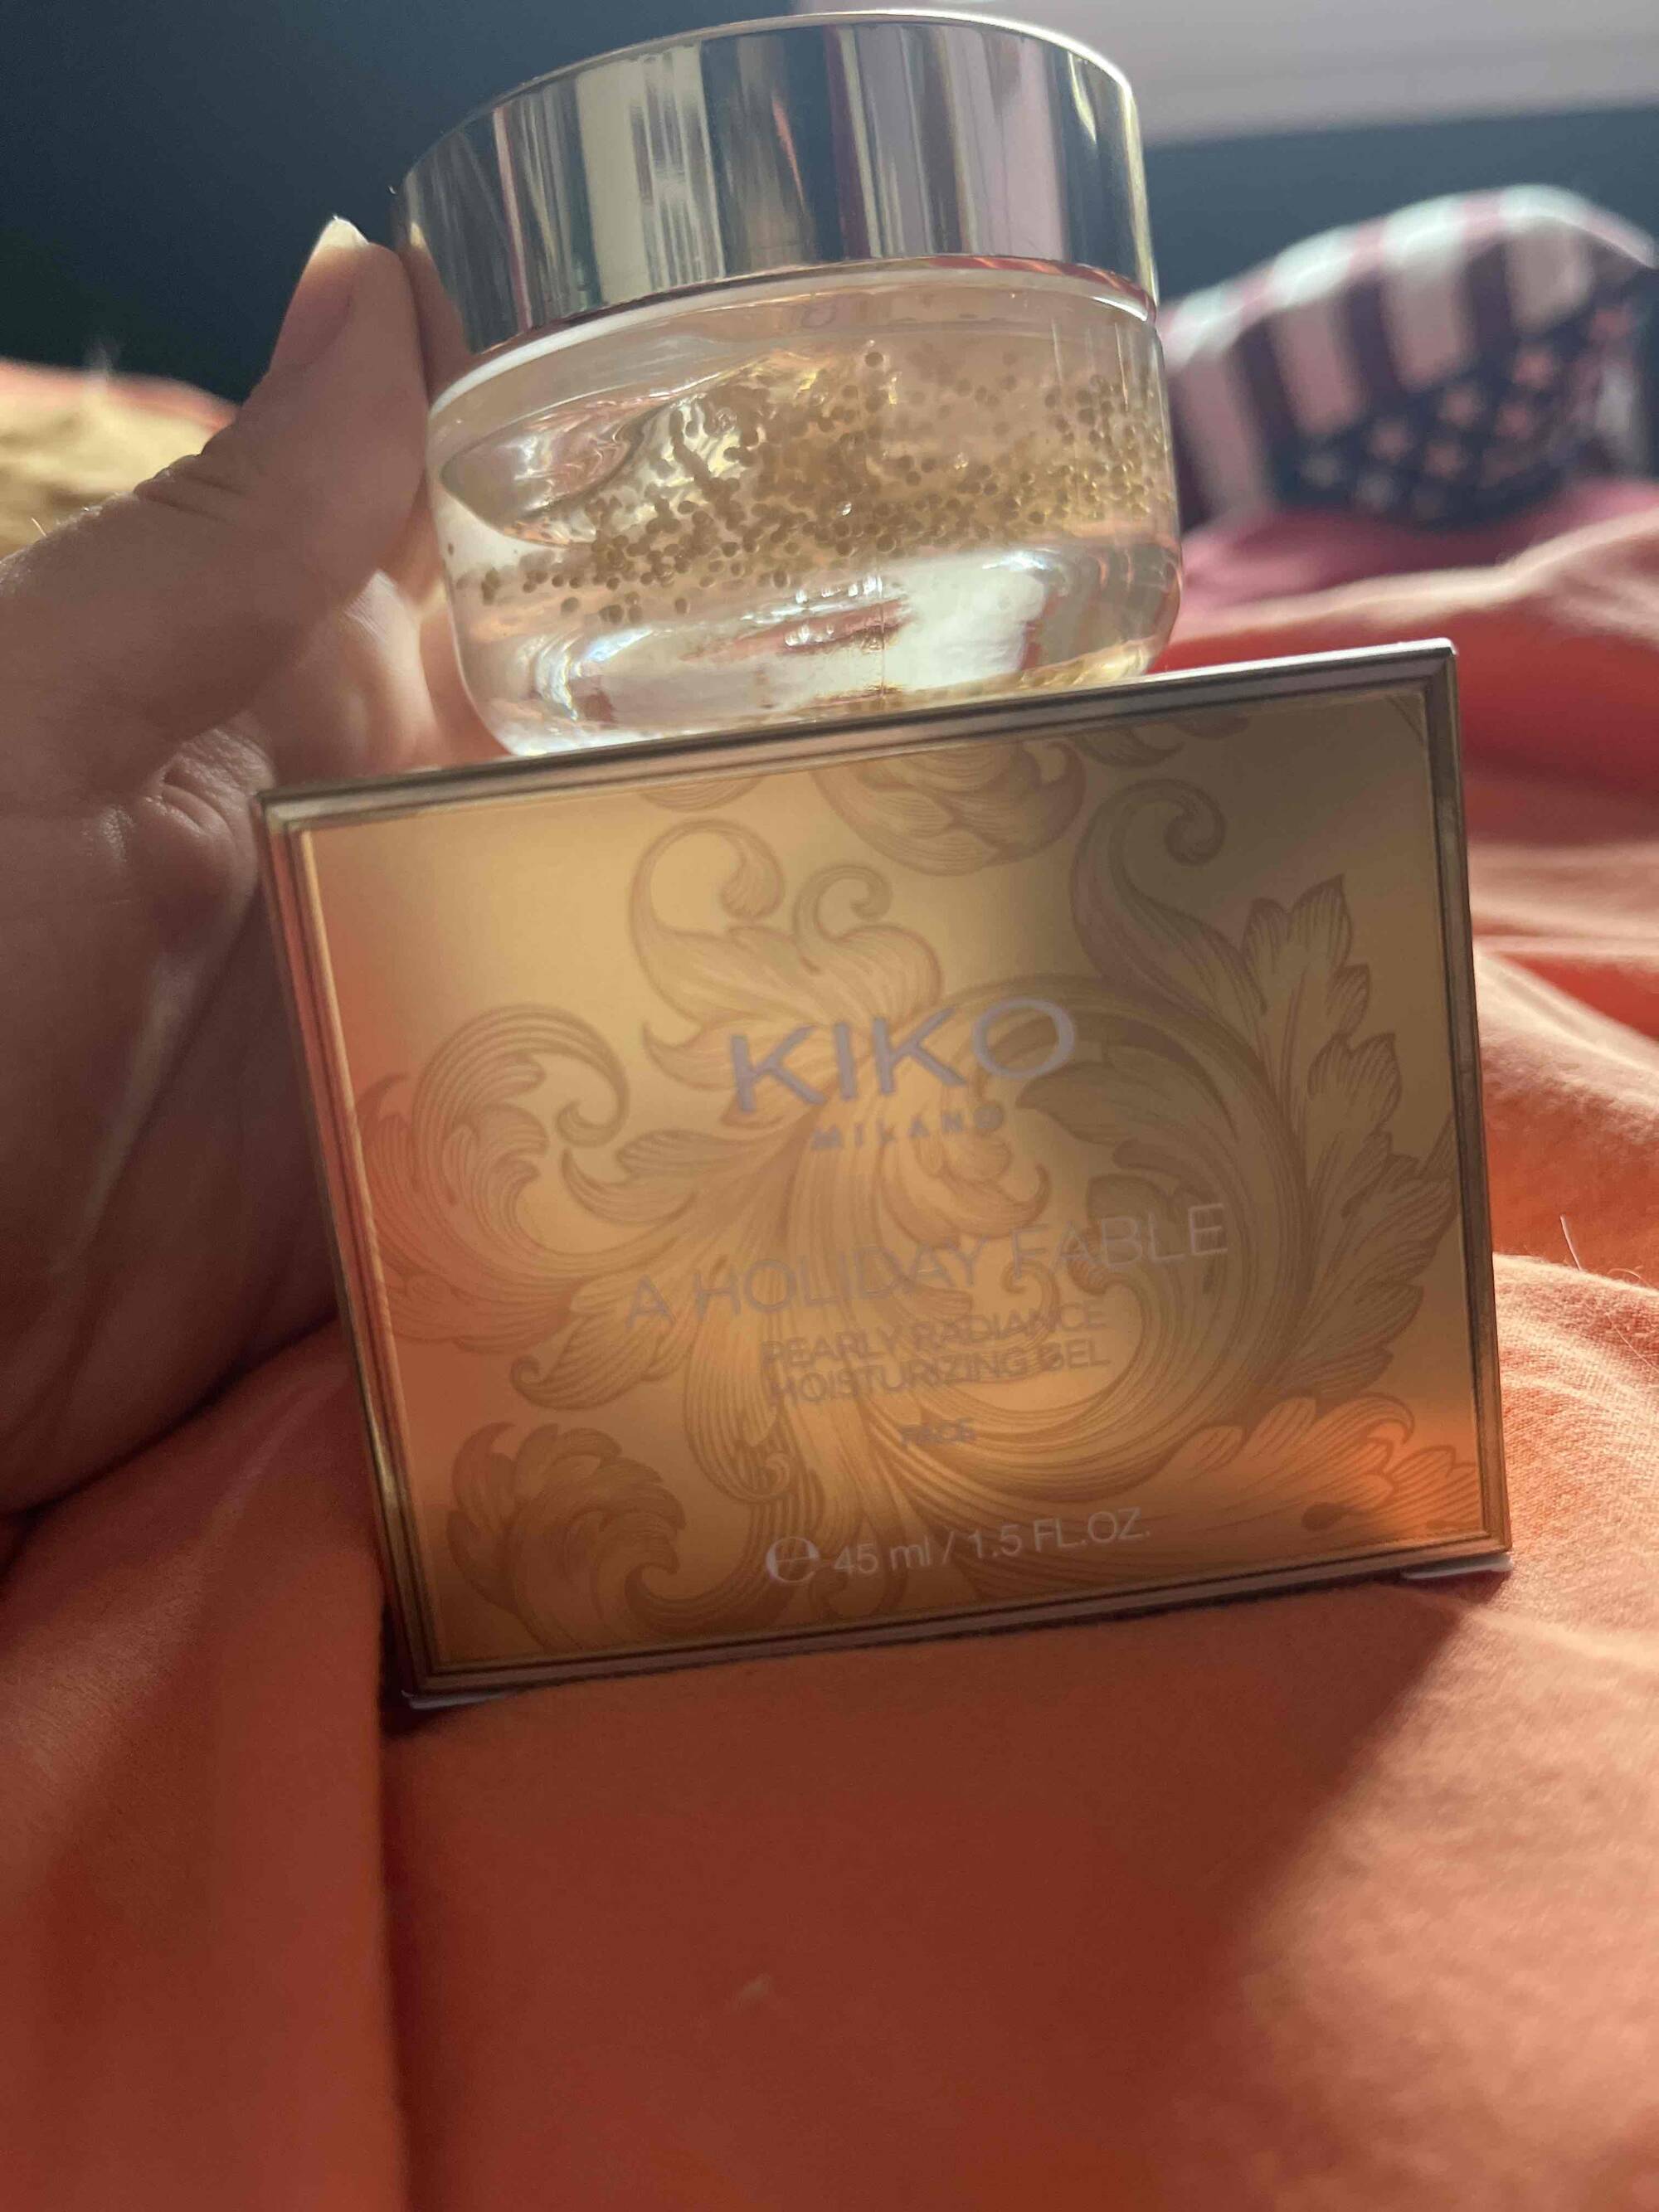 KIKO MILANO - A Holiday fable - Pearly radiance moisturizing gel